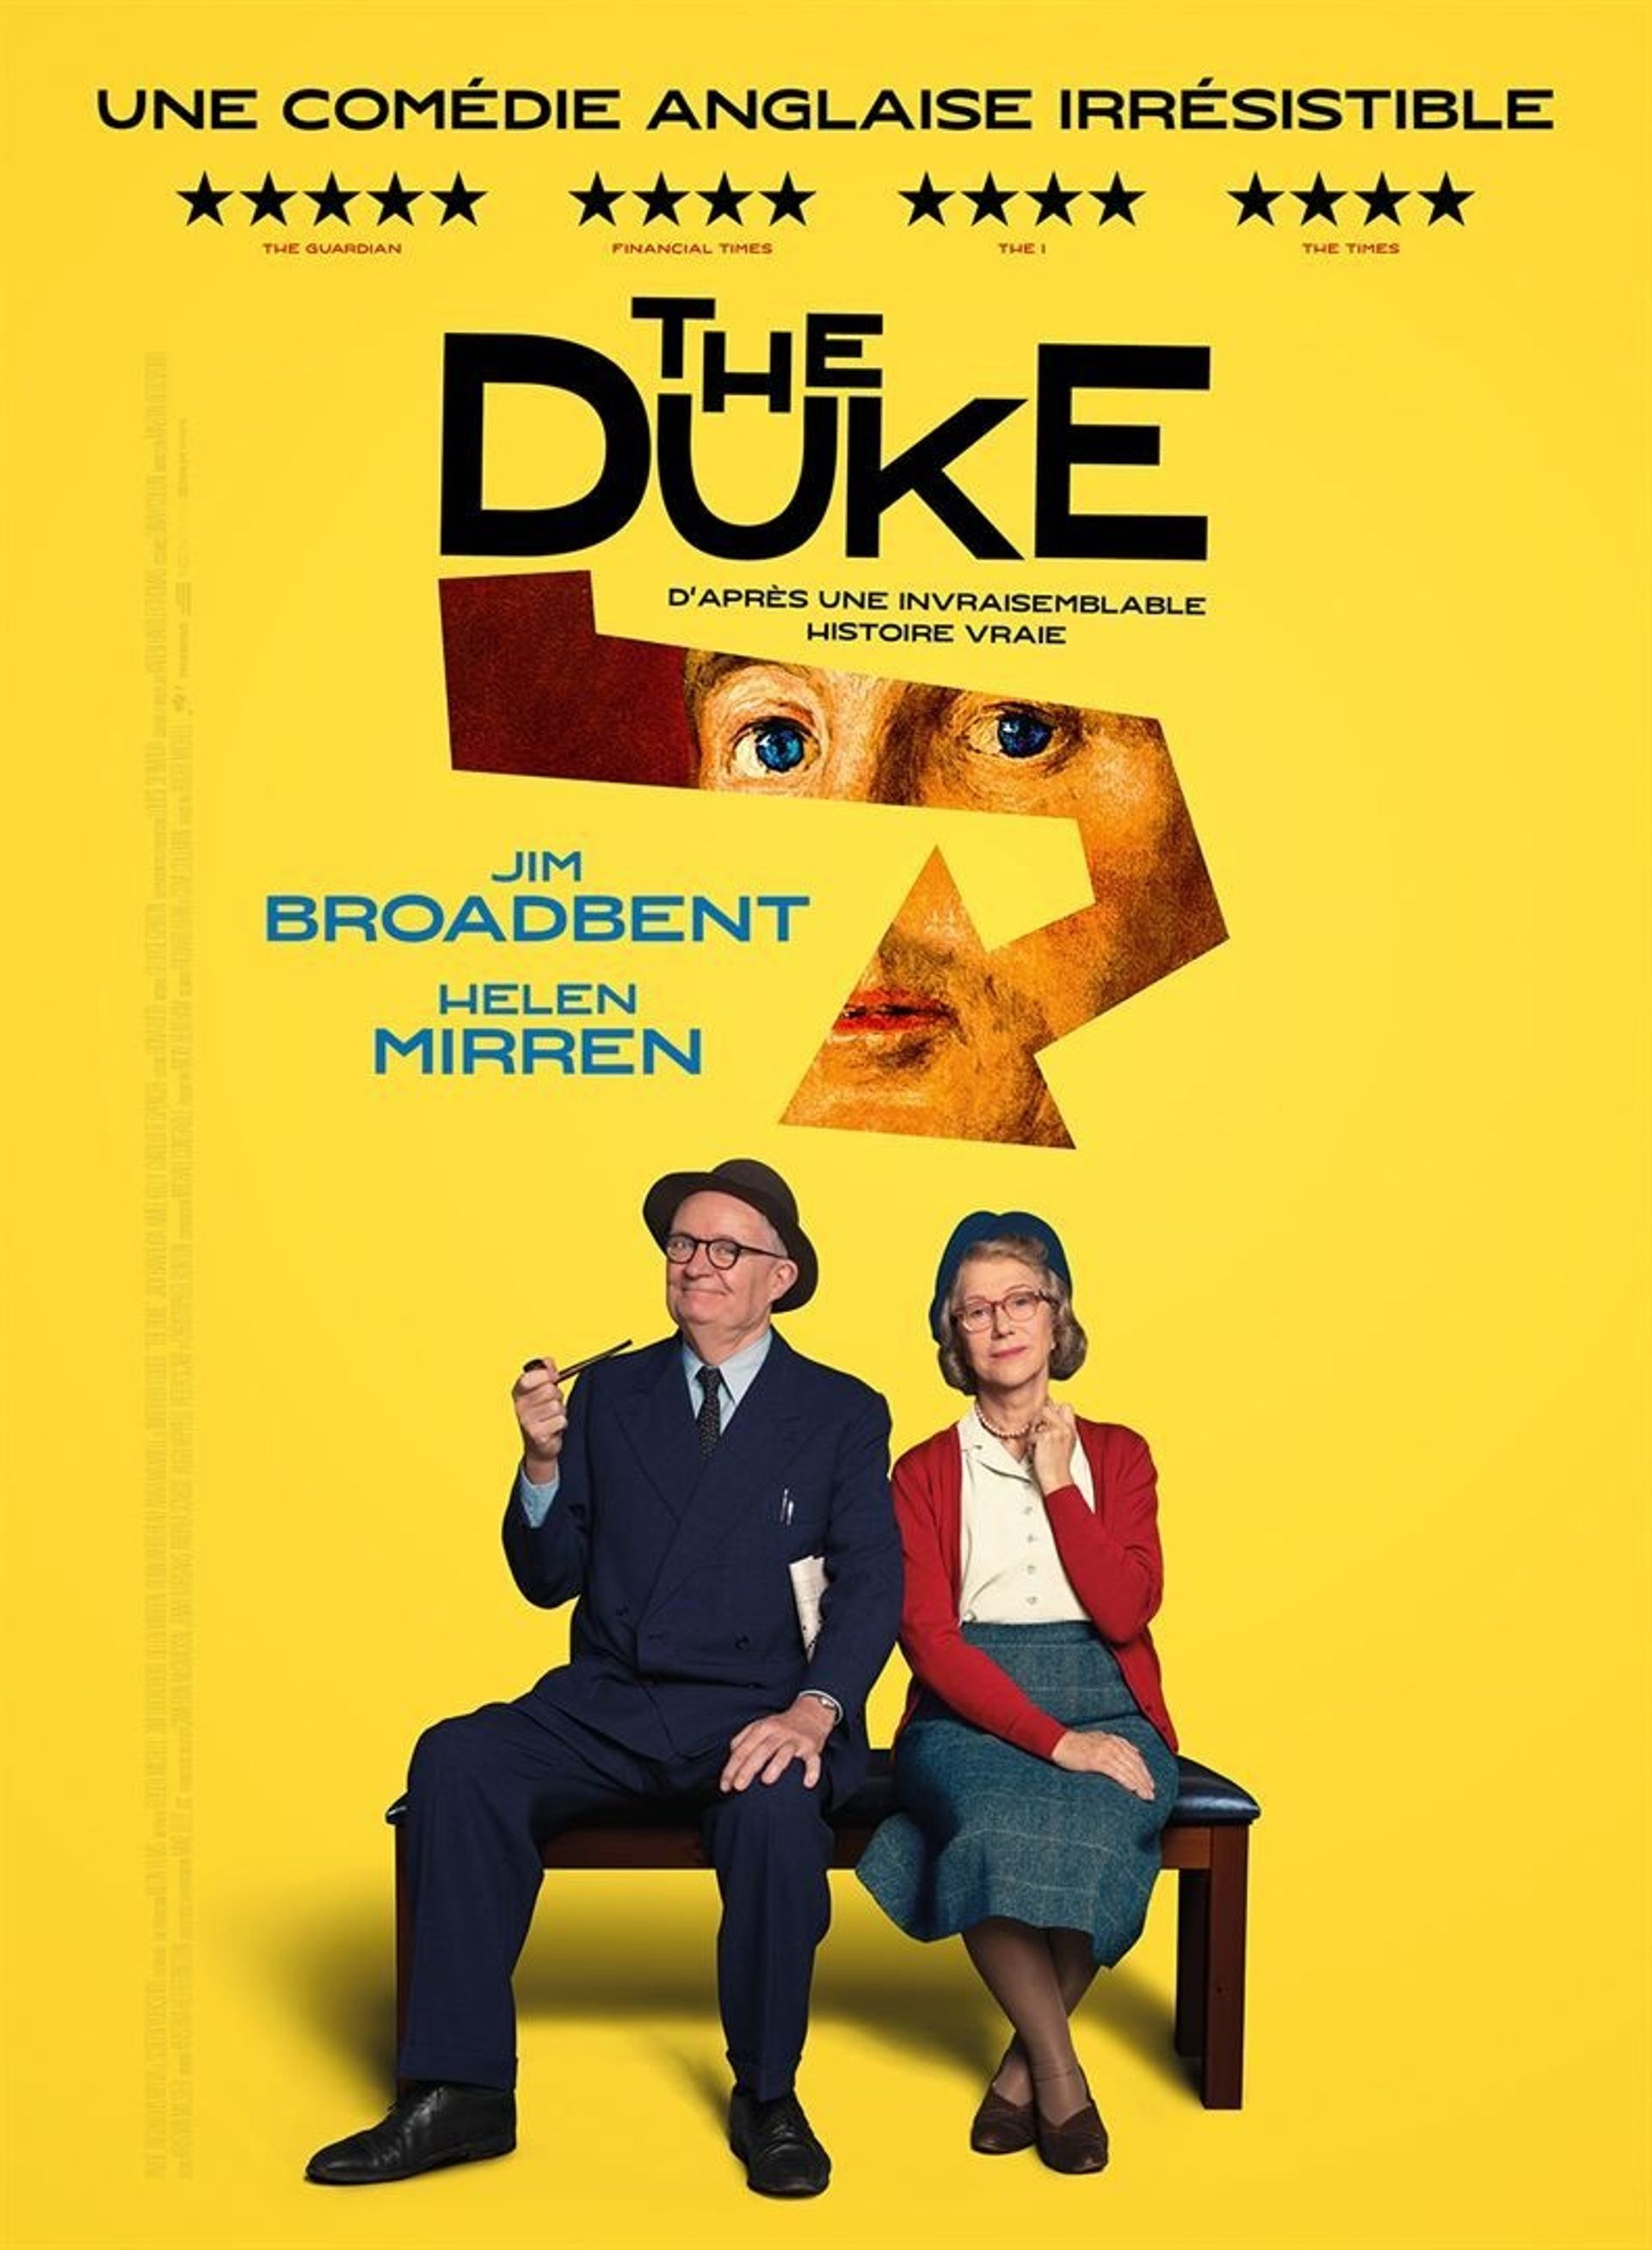 The Duke, disponible en DVD